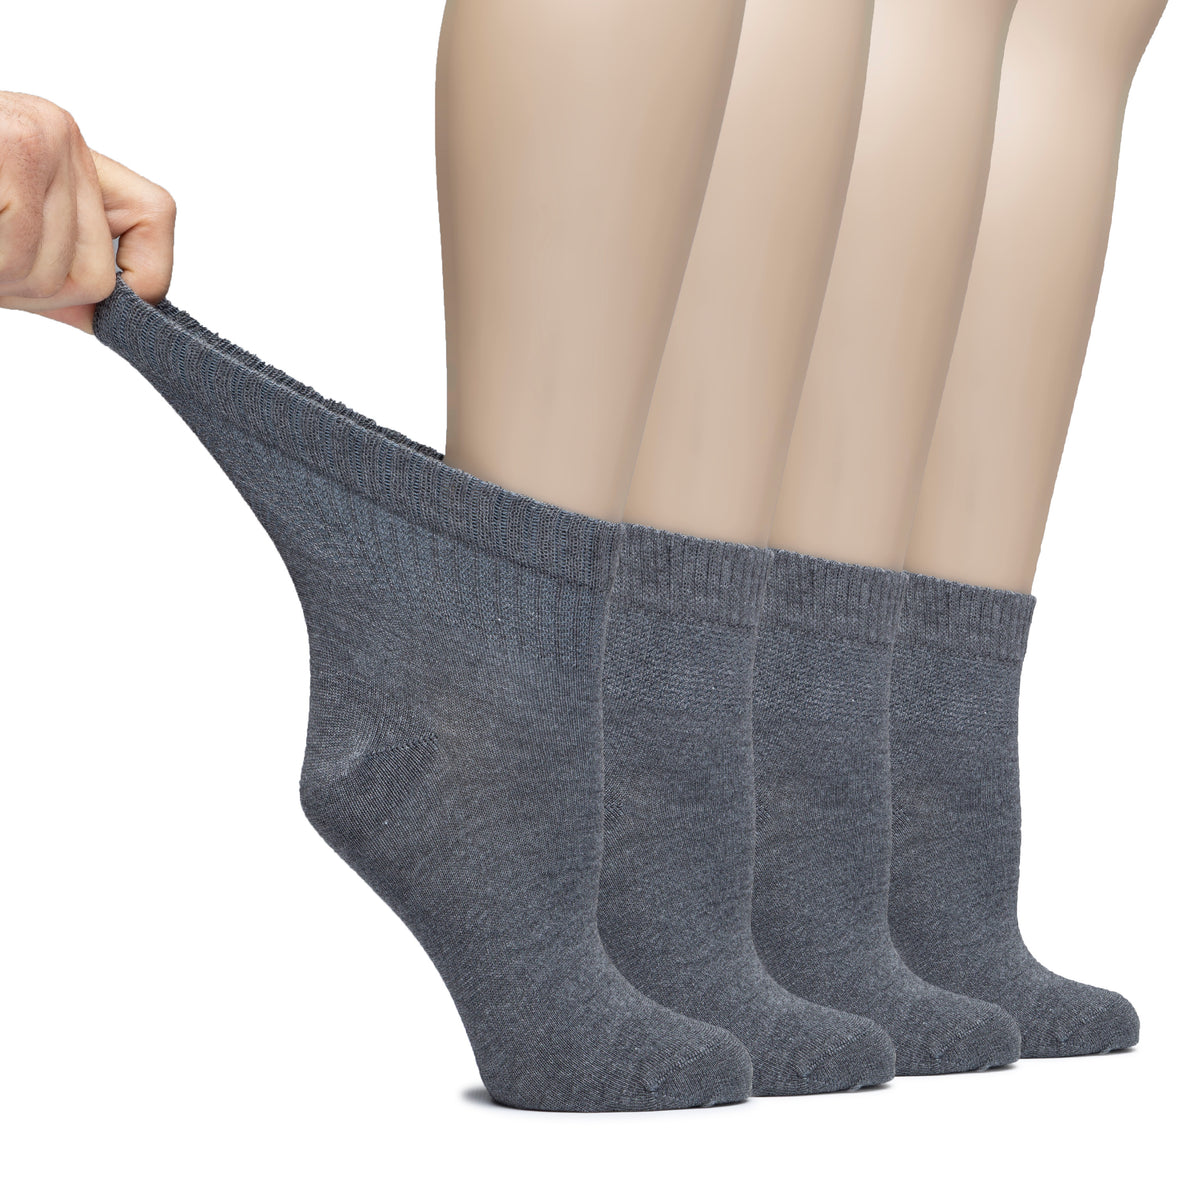 Hugh Ugoli Lightweight Women's Diabetic Ankle Socks Bamboo Thin Socks Seamless Toe and Non-Binding Top, 4 Pairs, , Shoe Size: 6-9/10-12 | Shoe Size: 6-9 | Navy Blue